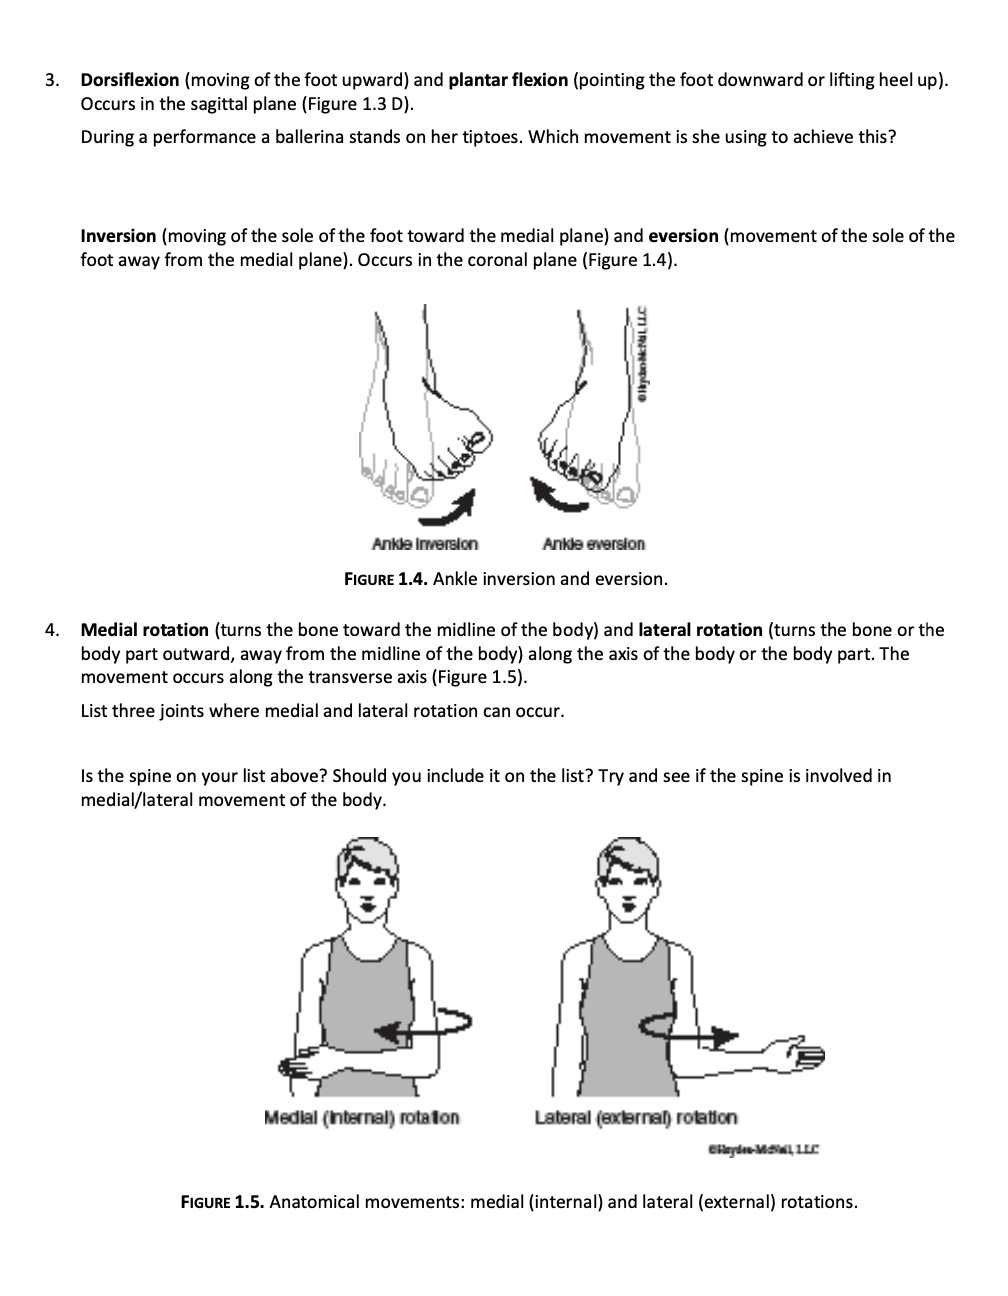 Dorsiflexion and Plantar Flexion of the Foot